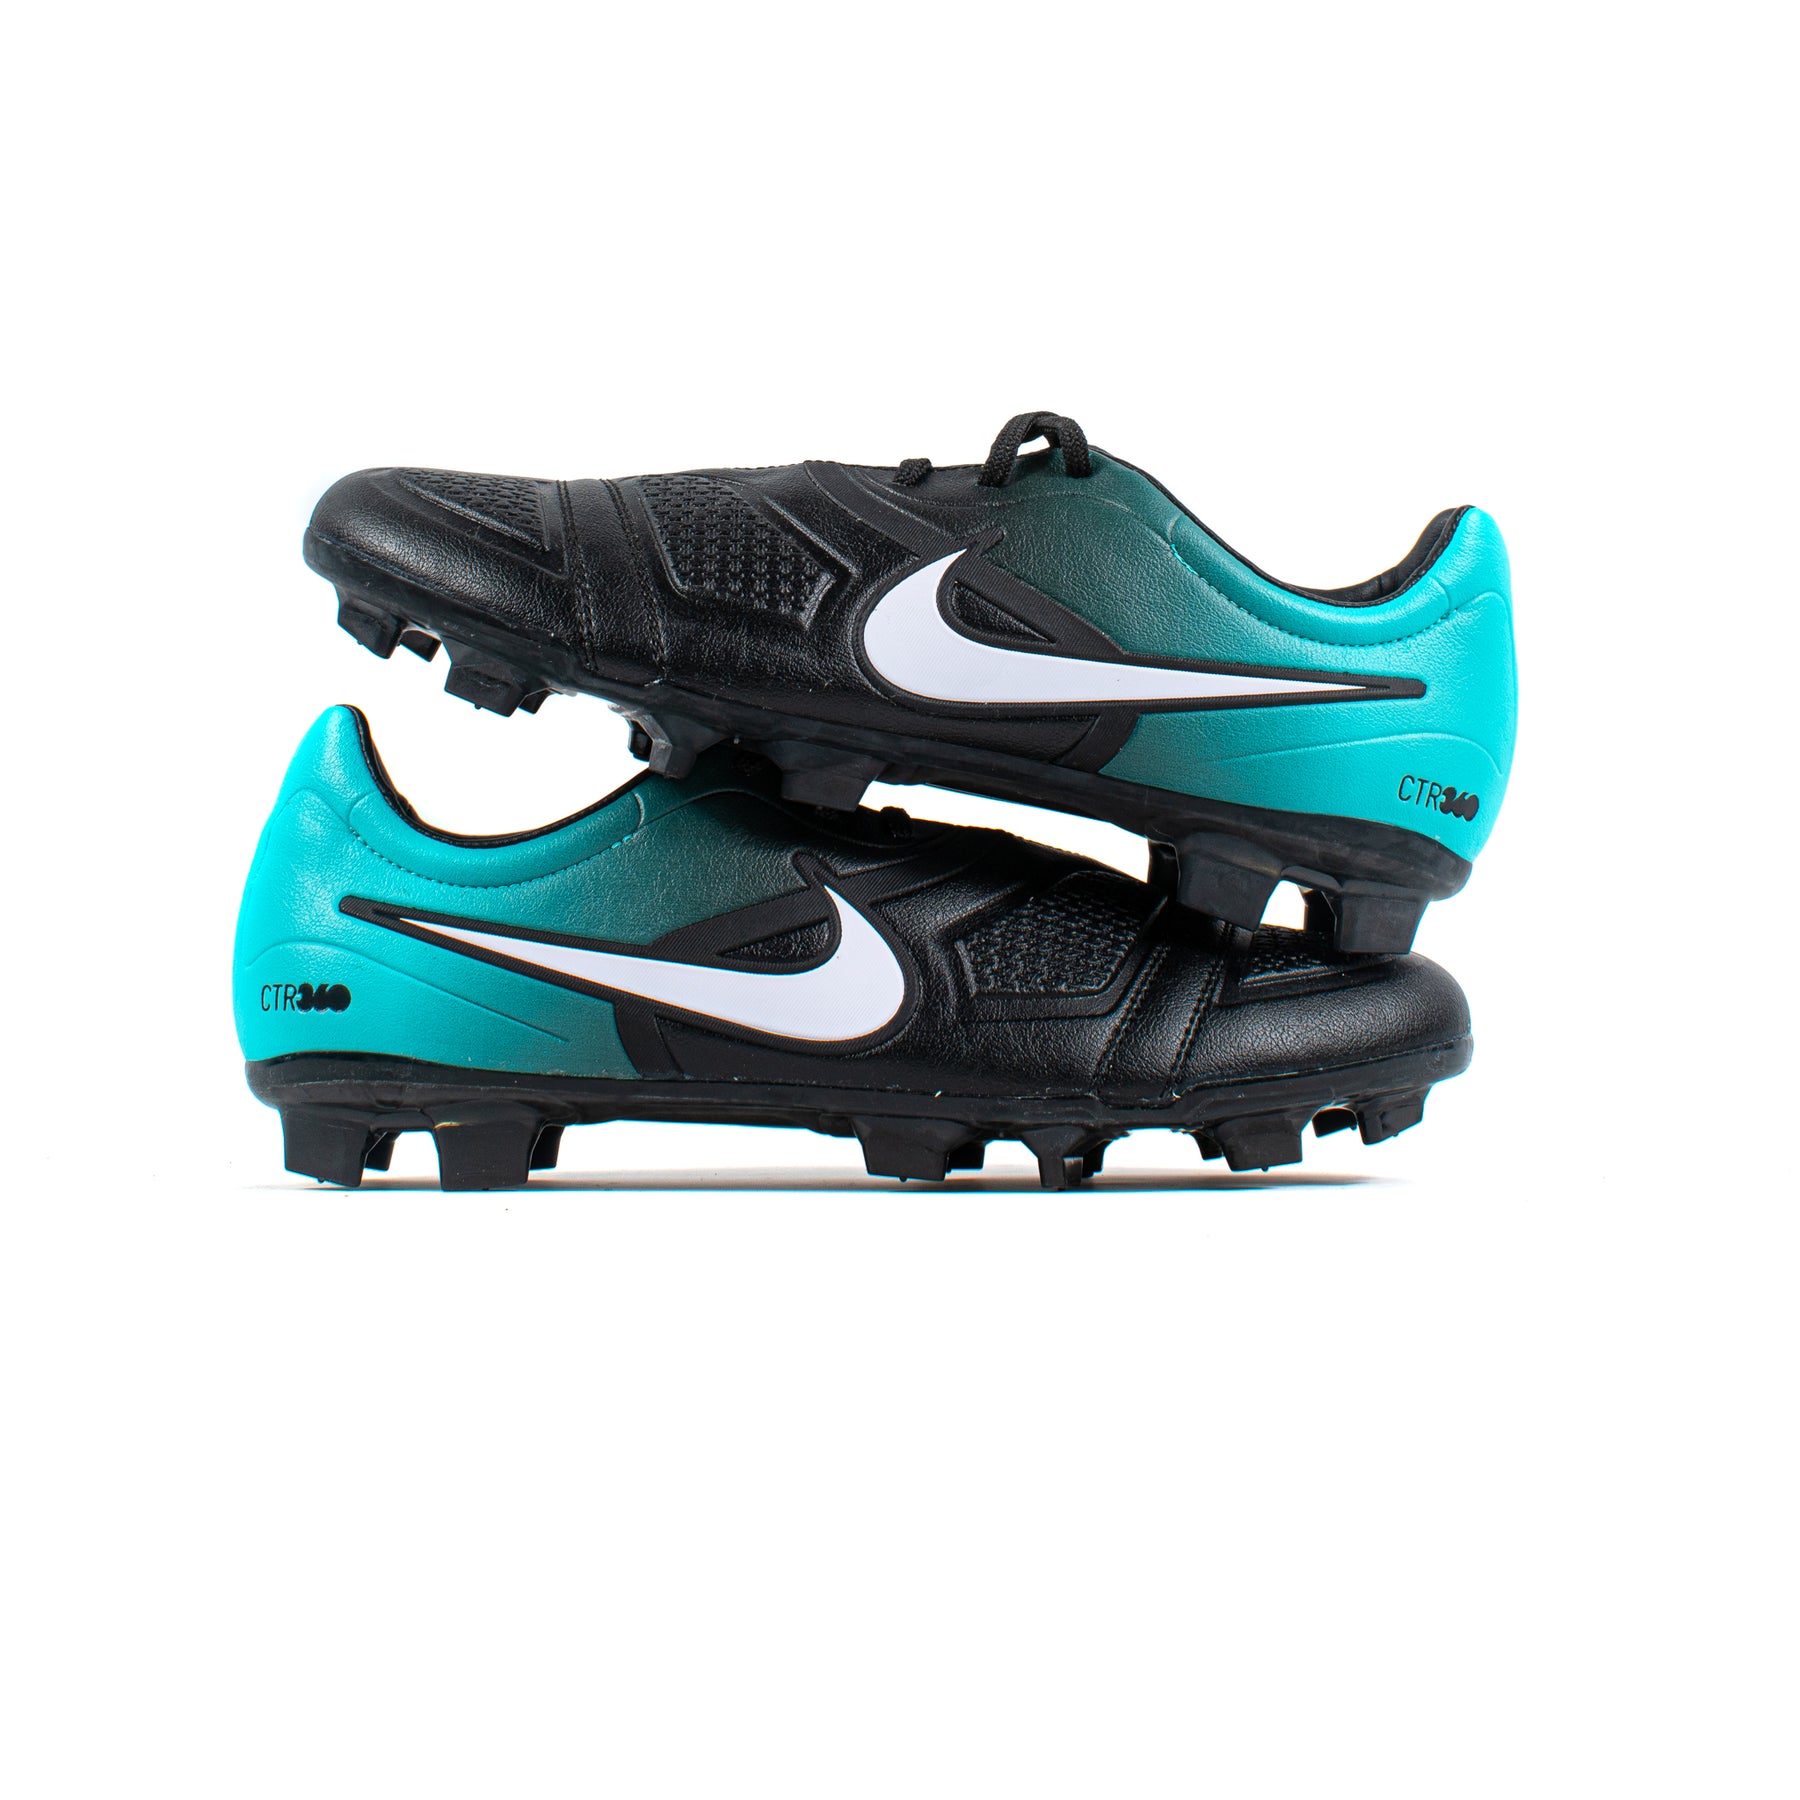 Nike CTR360 Elite FG – Soccer Cleats